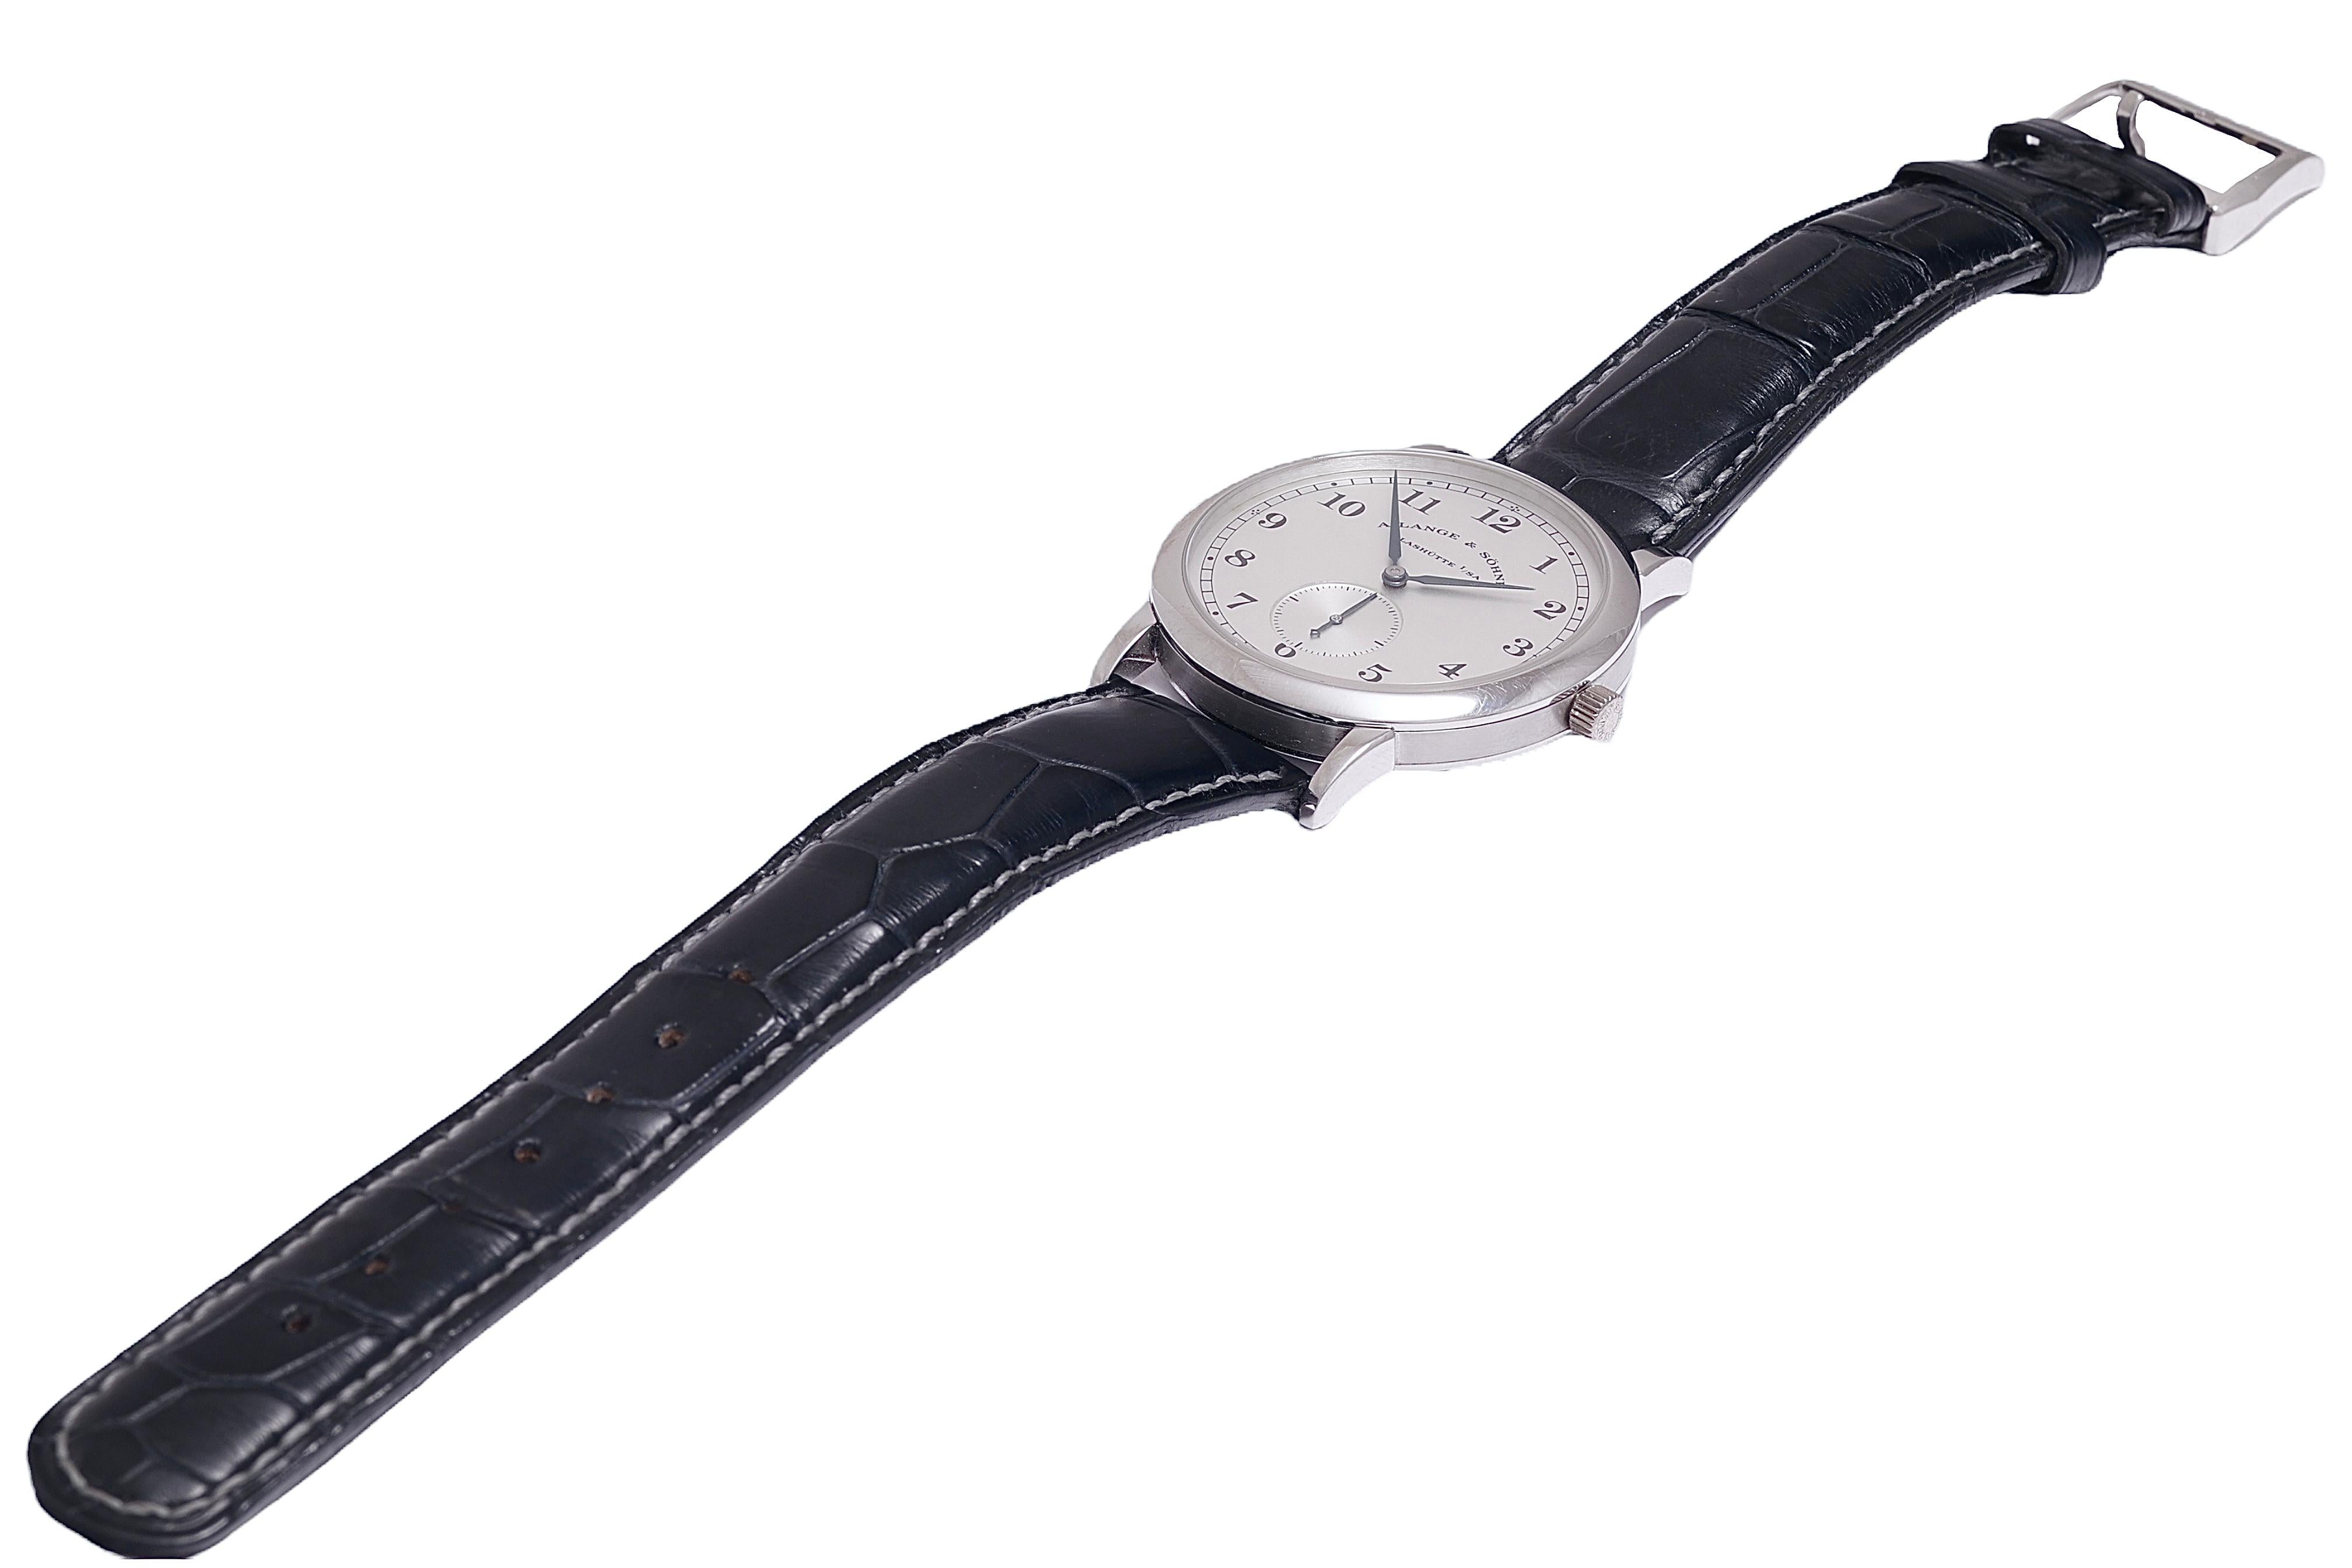 Artisan Platinum Lange Sohne 1815 Wrist Watch, Lange Certificate Like New Ref. 206.025 For Sale